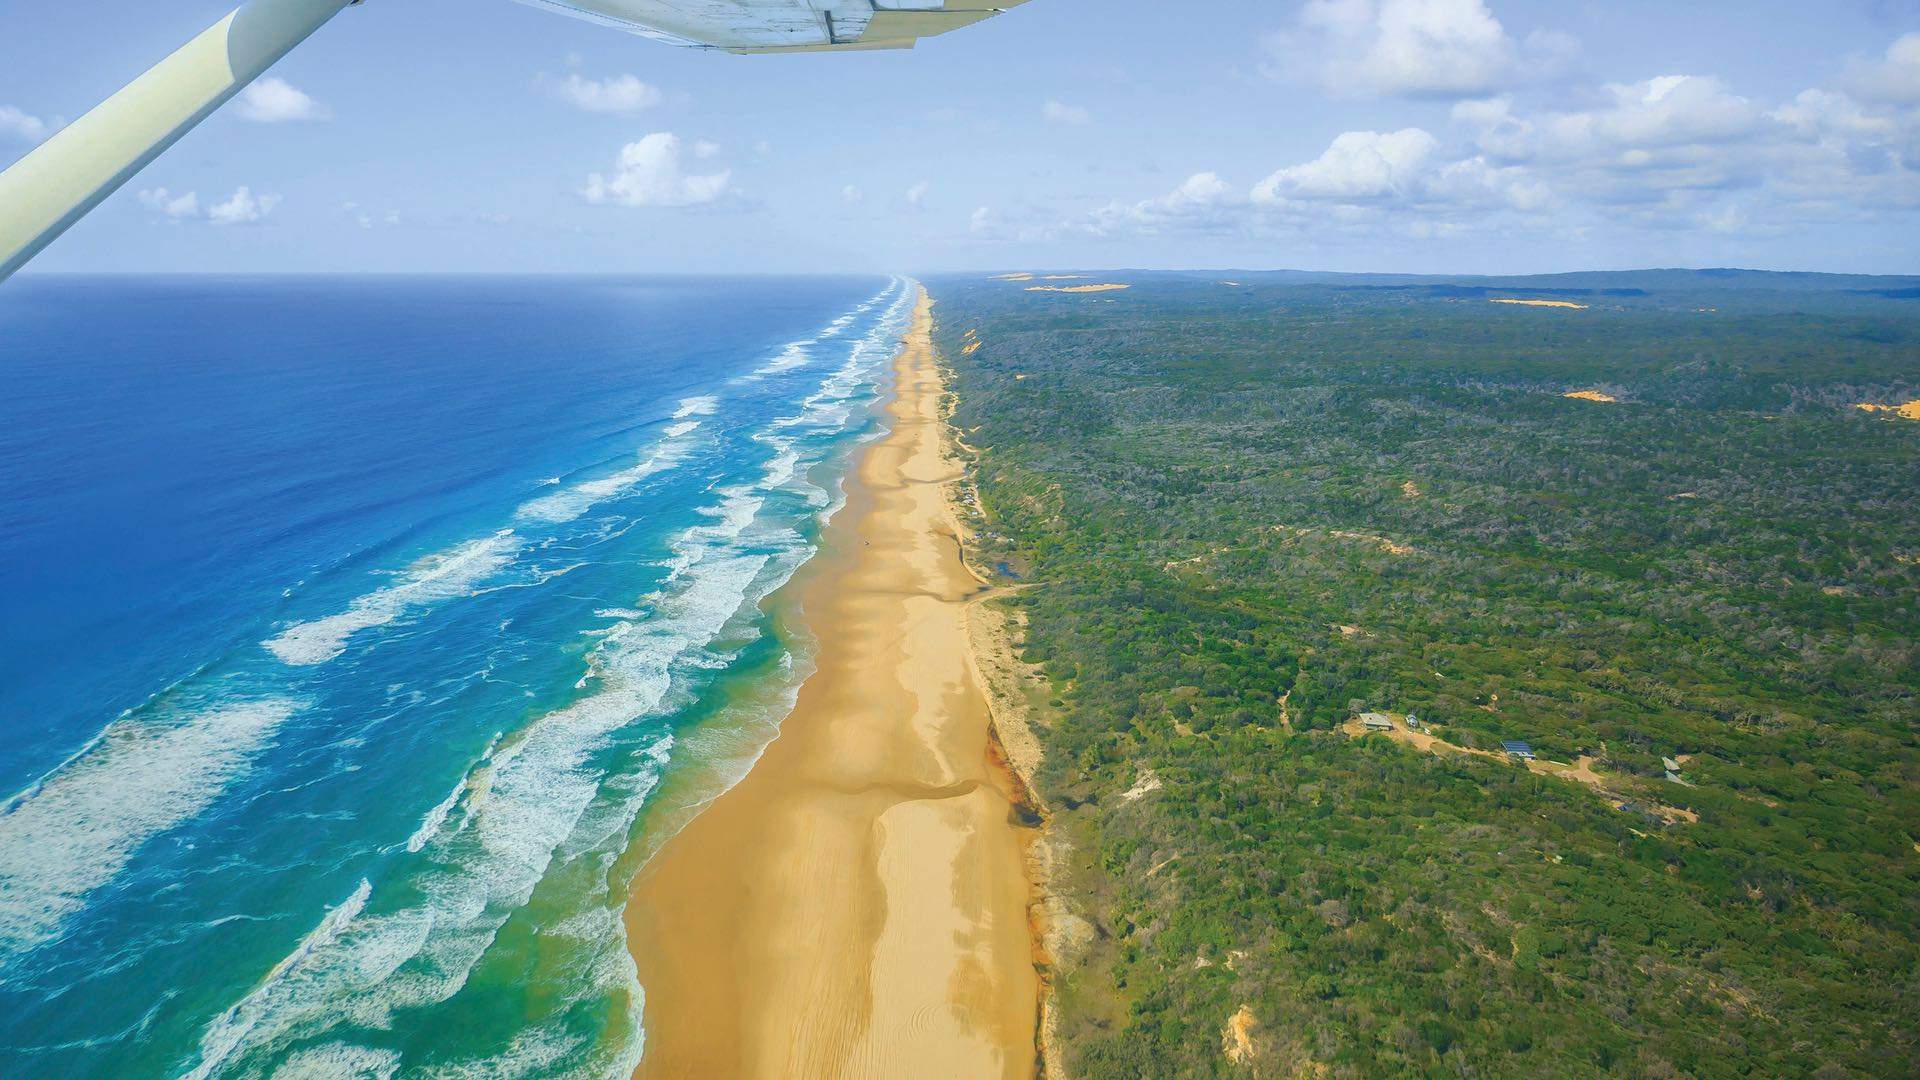 75 Mile Beach - one of the best beaches in Australia